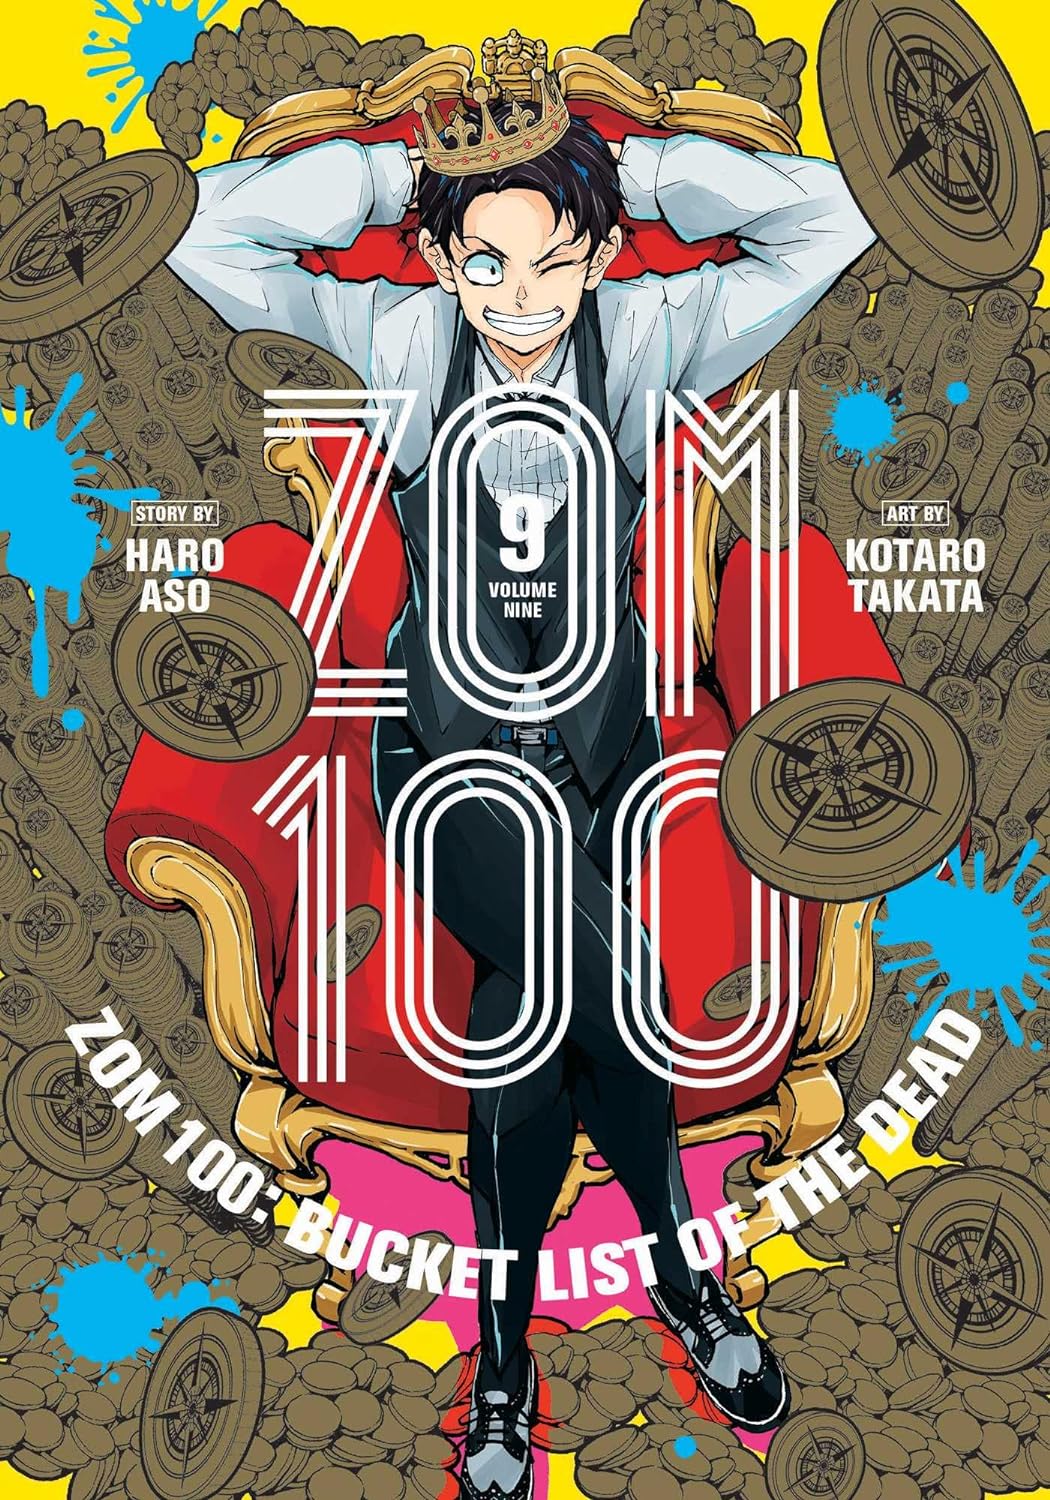 Zom 100: Bucket List of the Dead Vol. 9